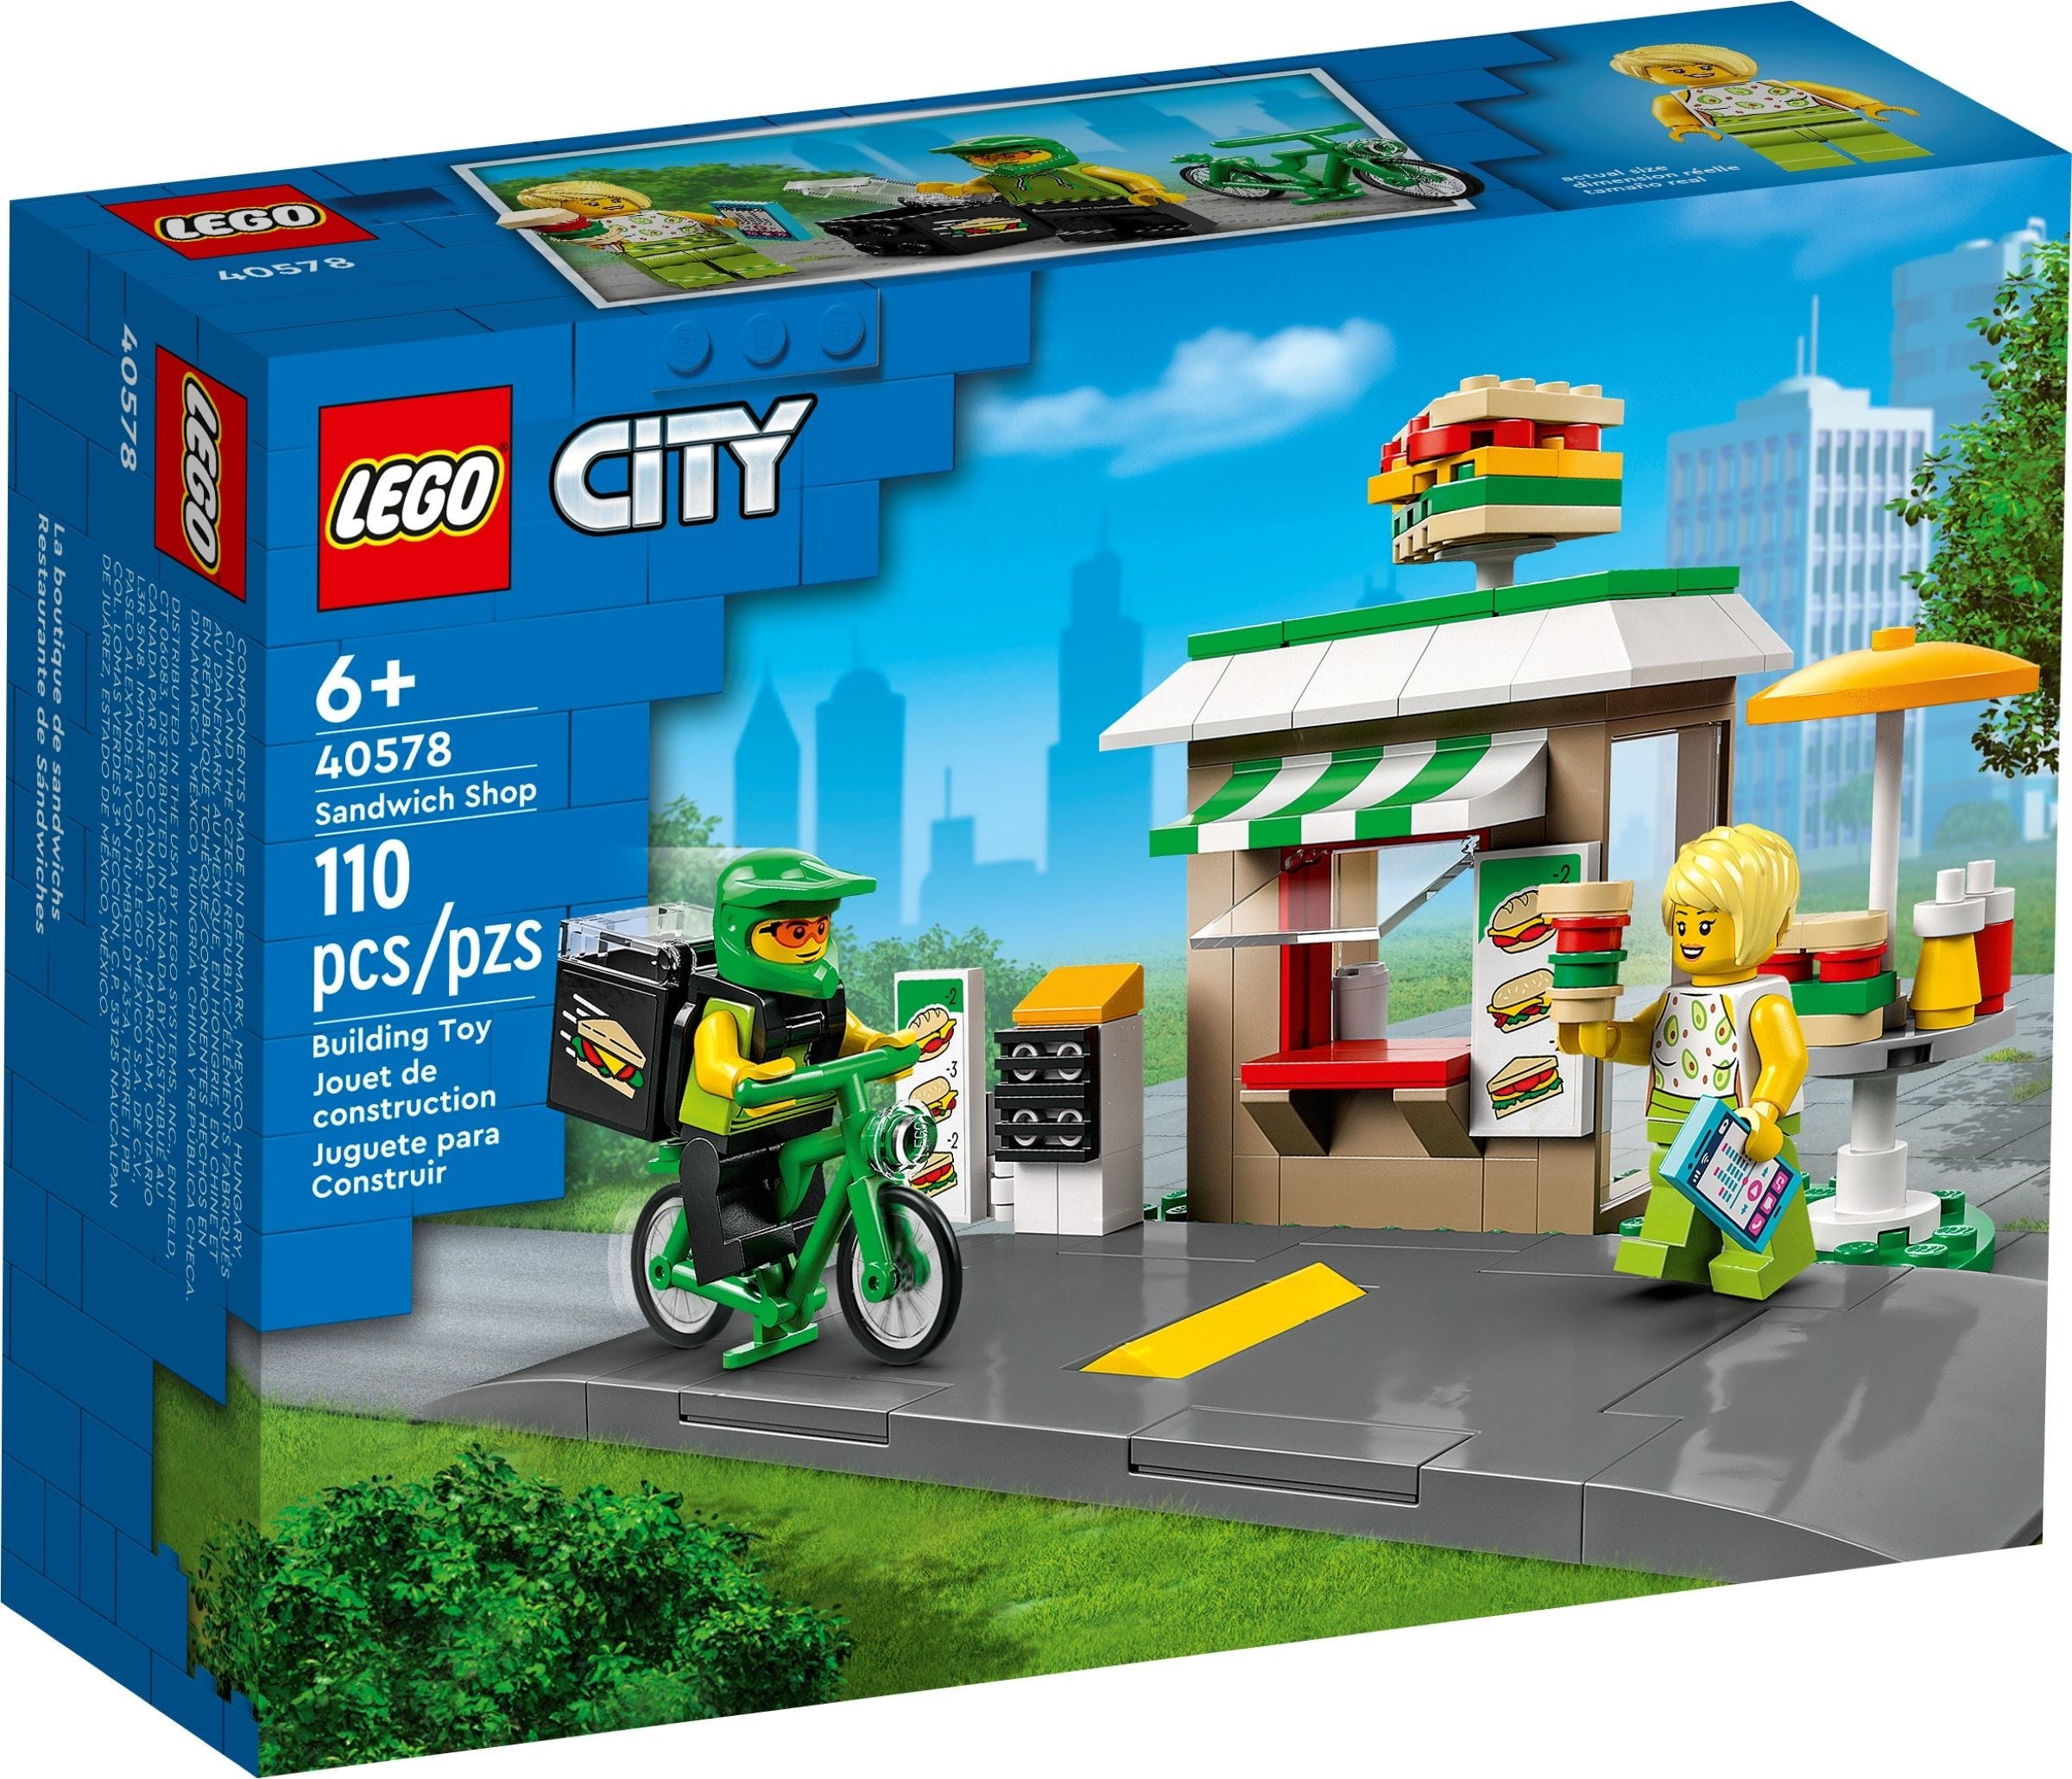 Lego City 40578 - Sandwich Shop